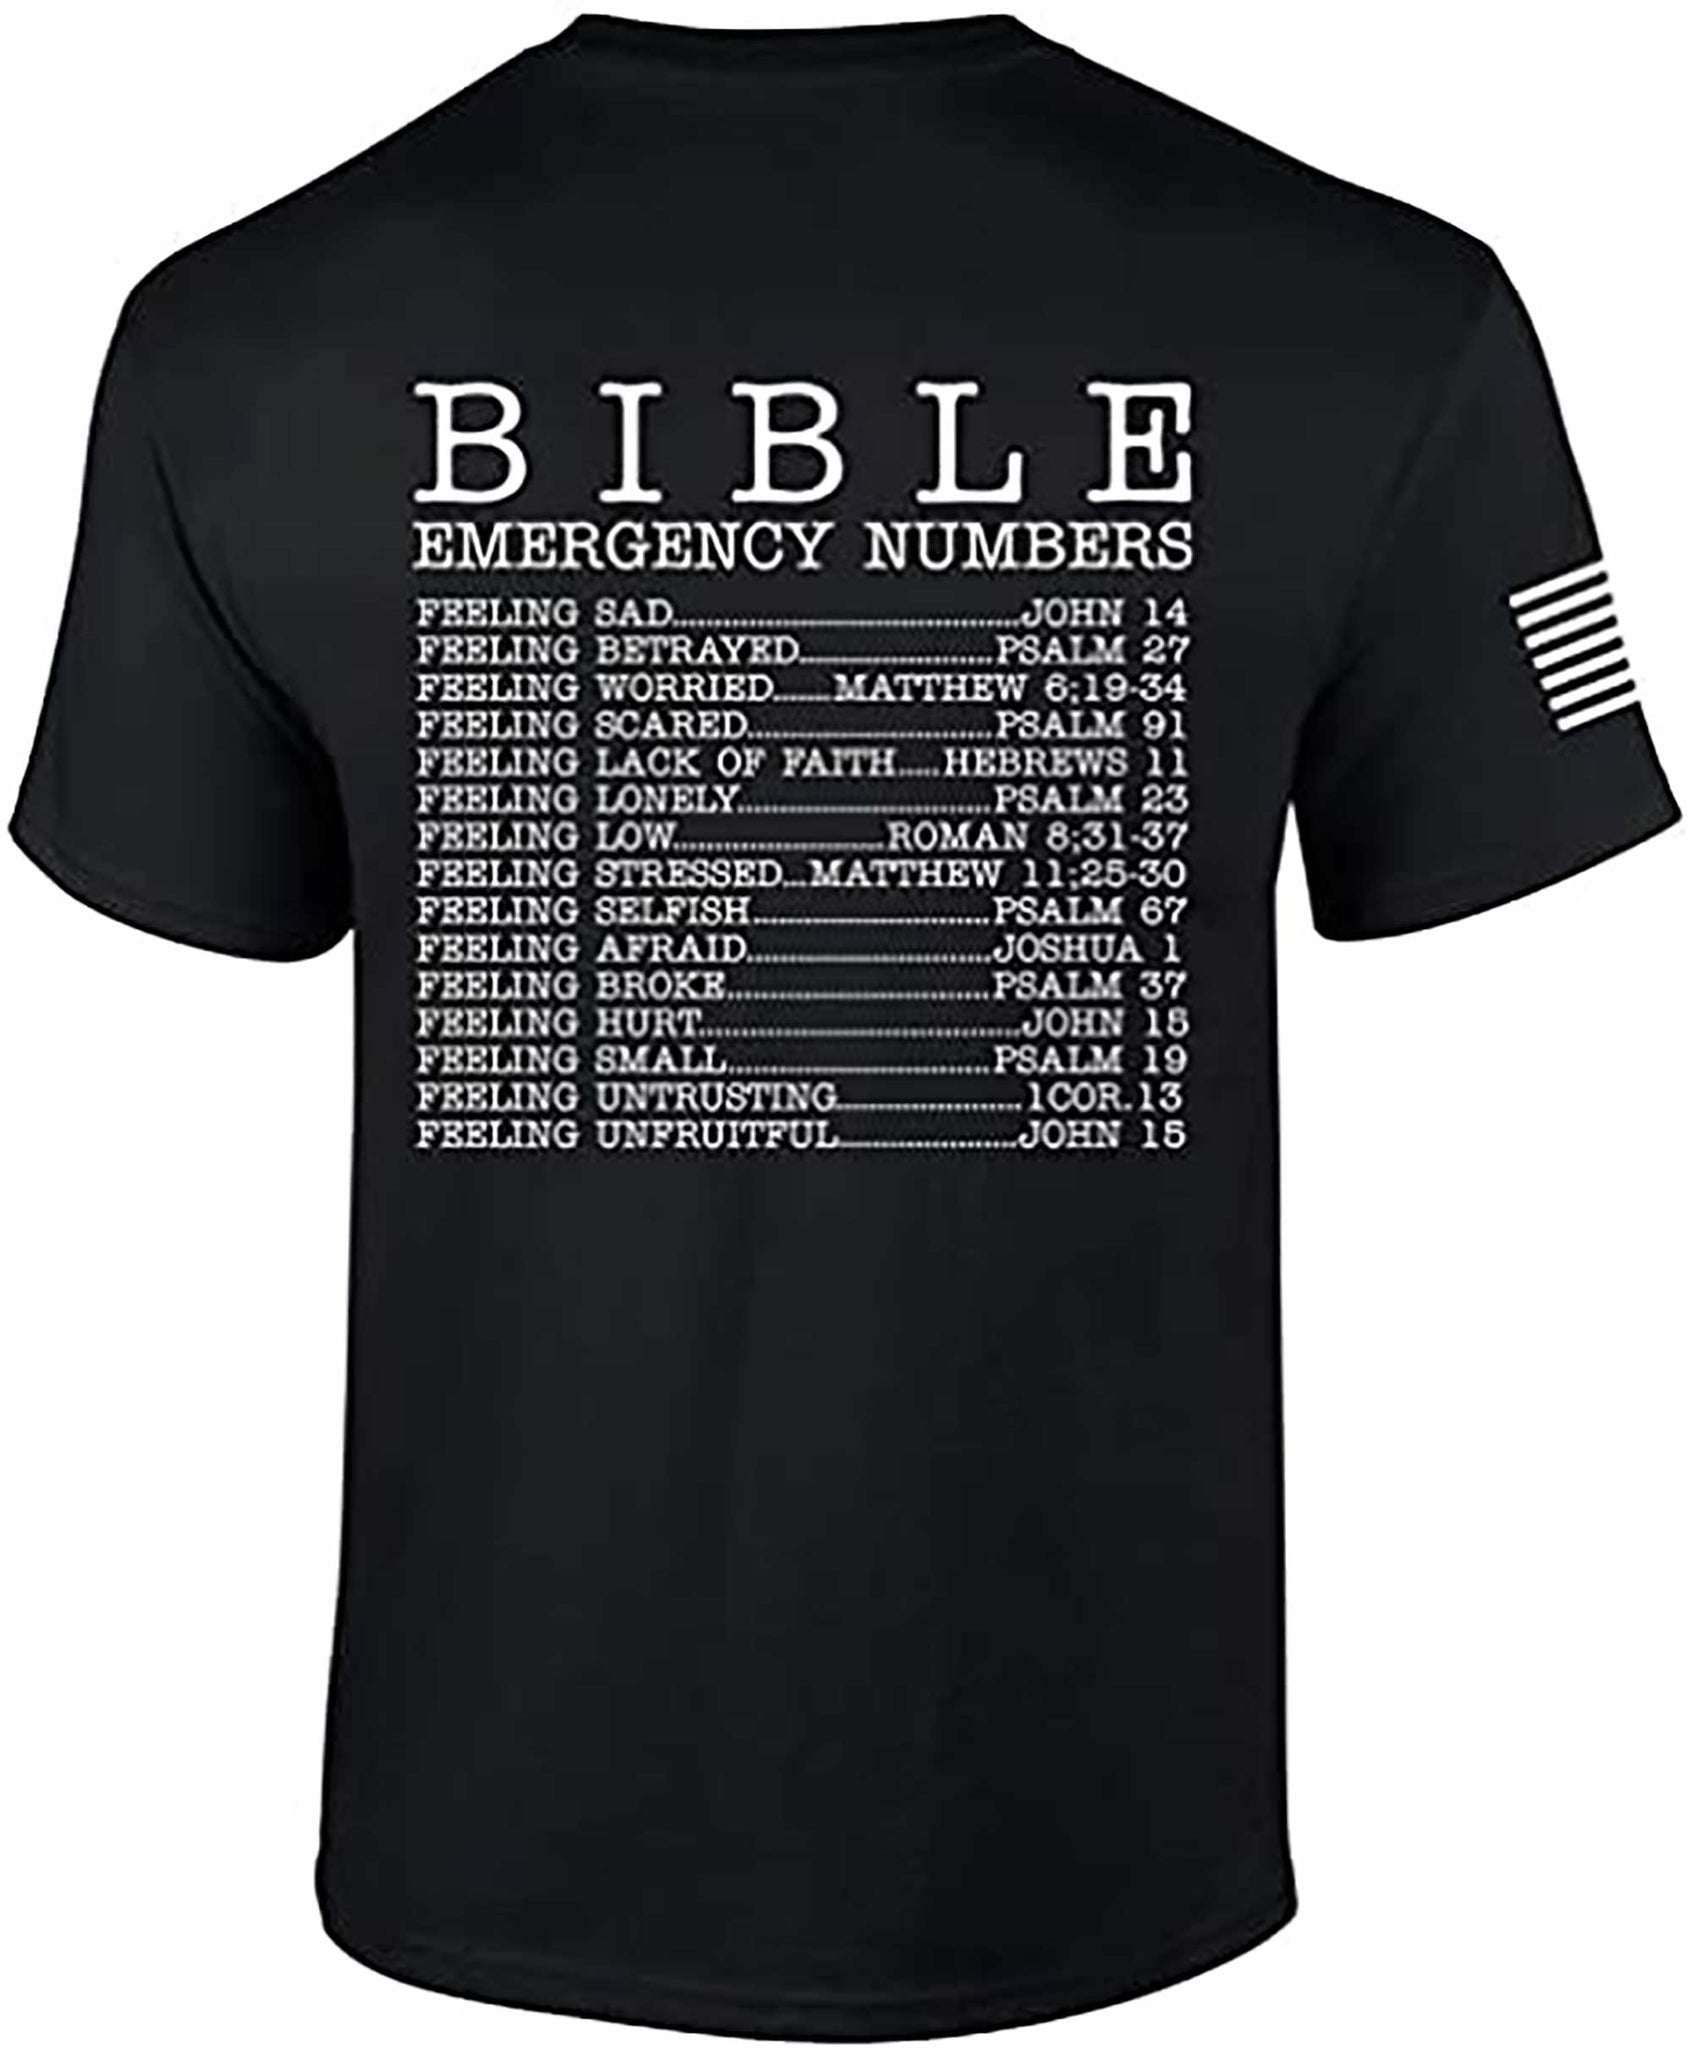 Skitongift Christian Bible Emergency Numbers Scripture Short Sleeve T Shirt Graphic Tee